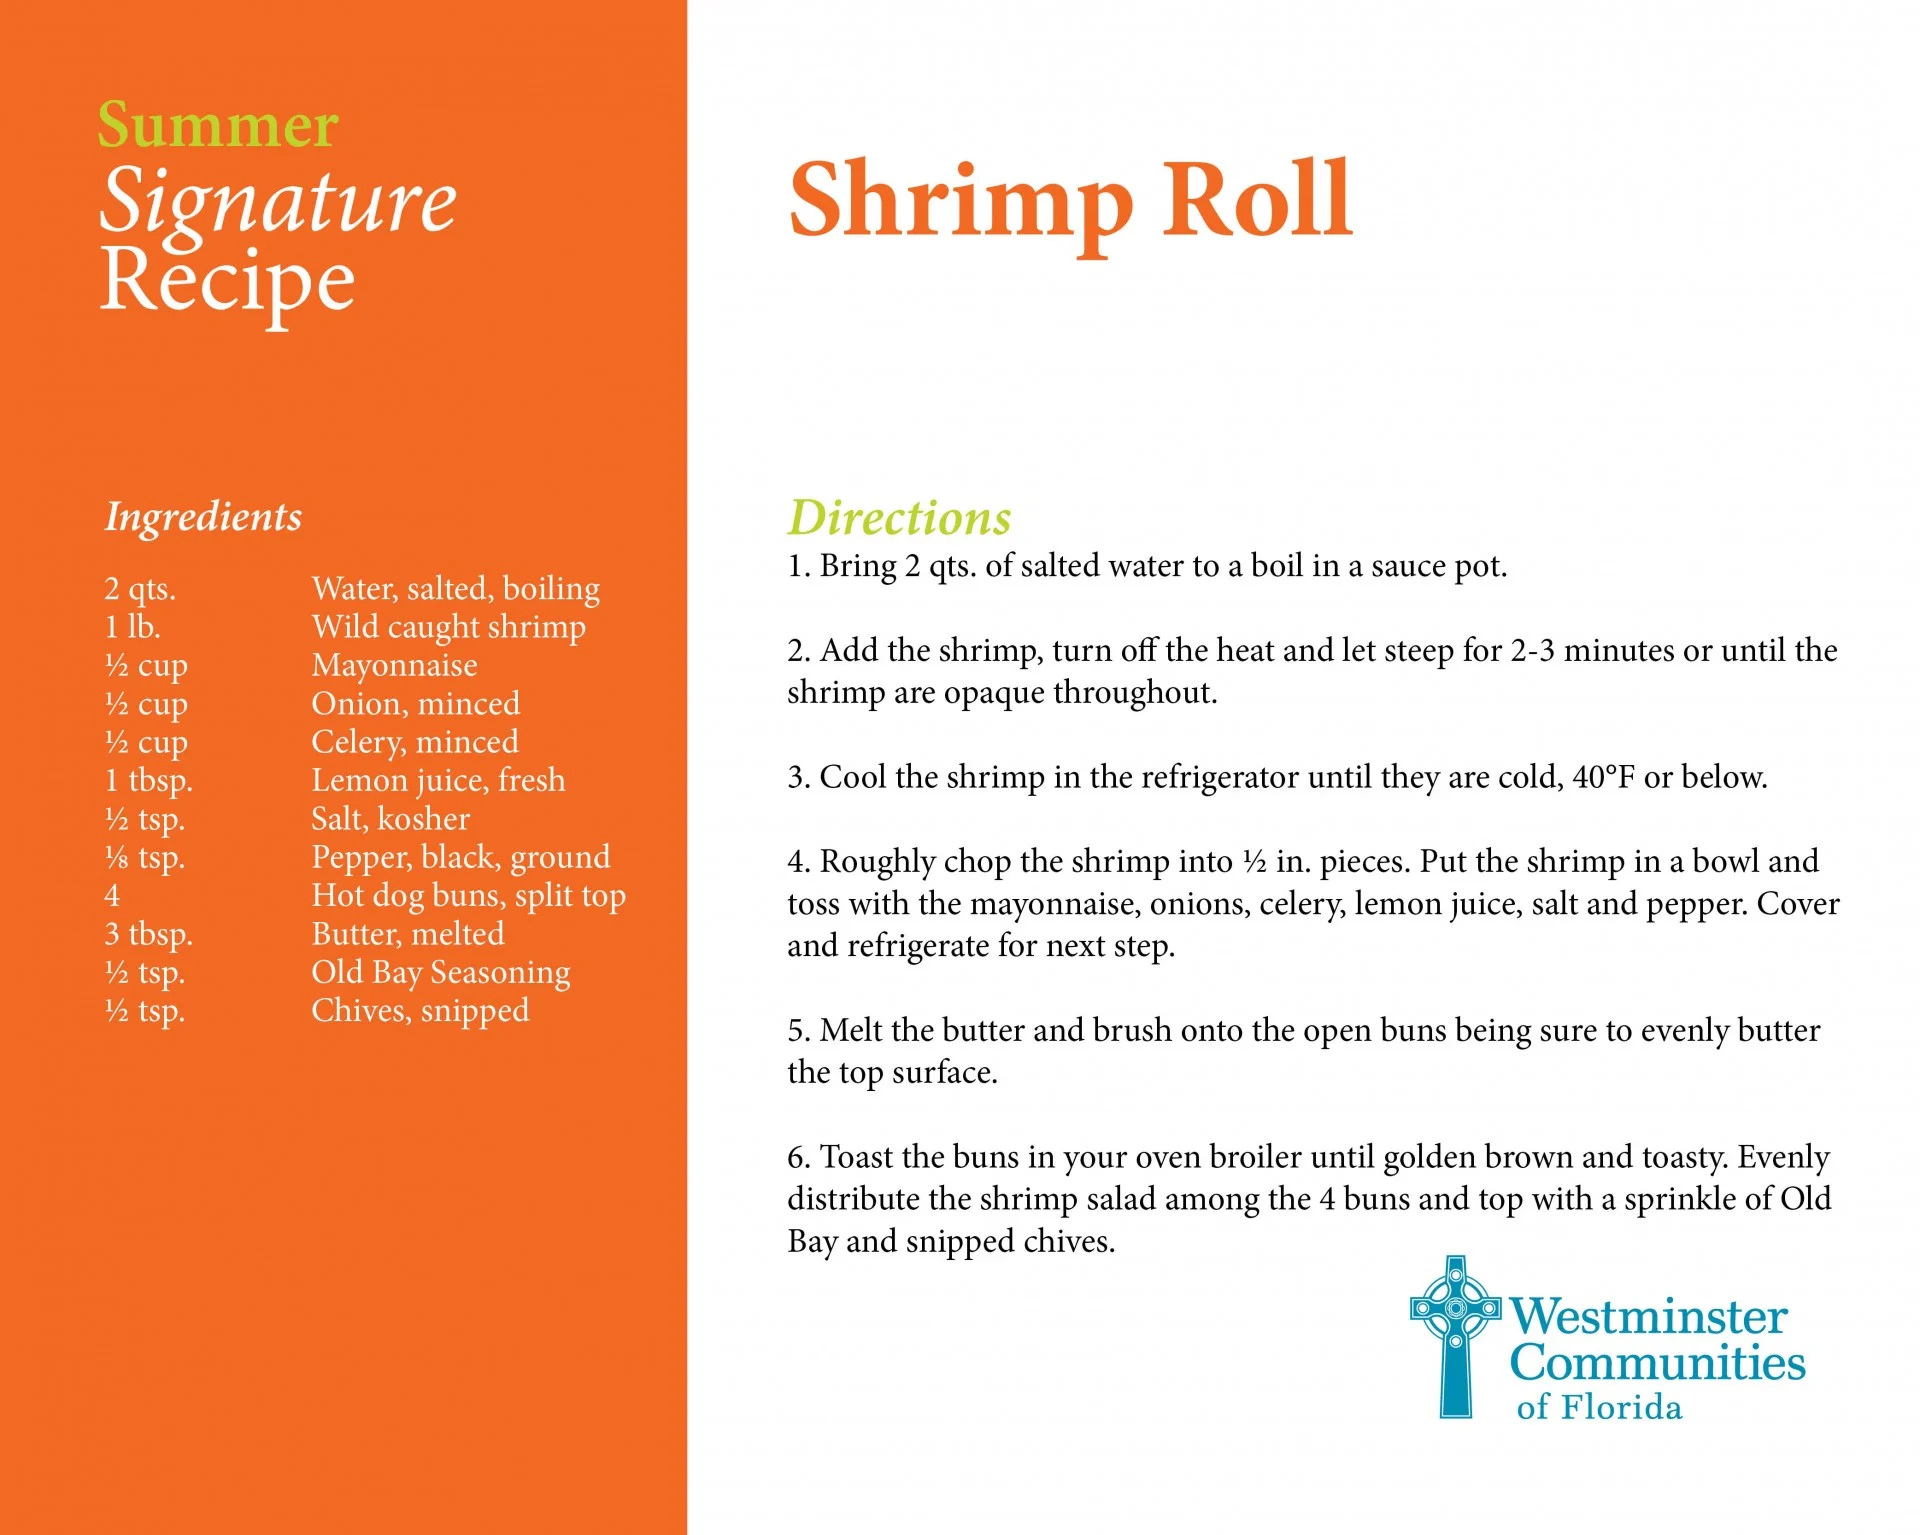 Our Signature Shrimp Roll